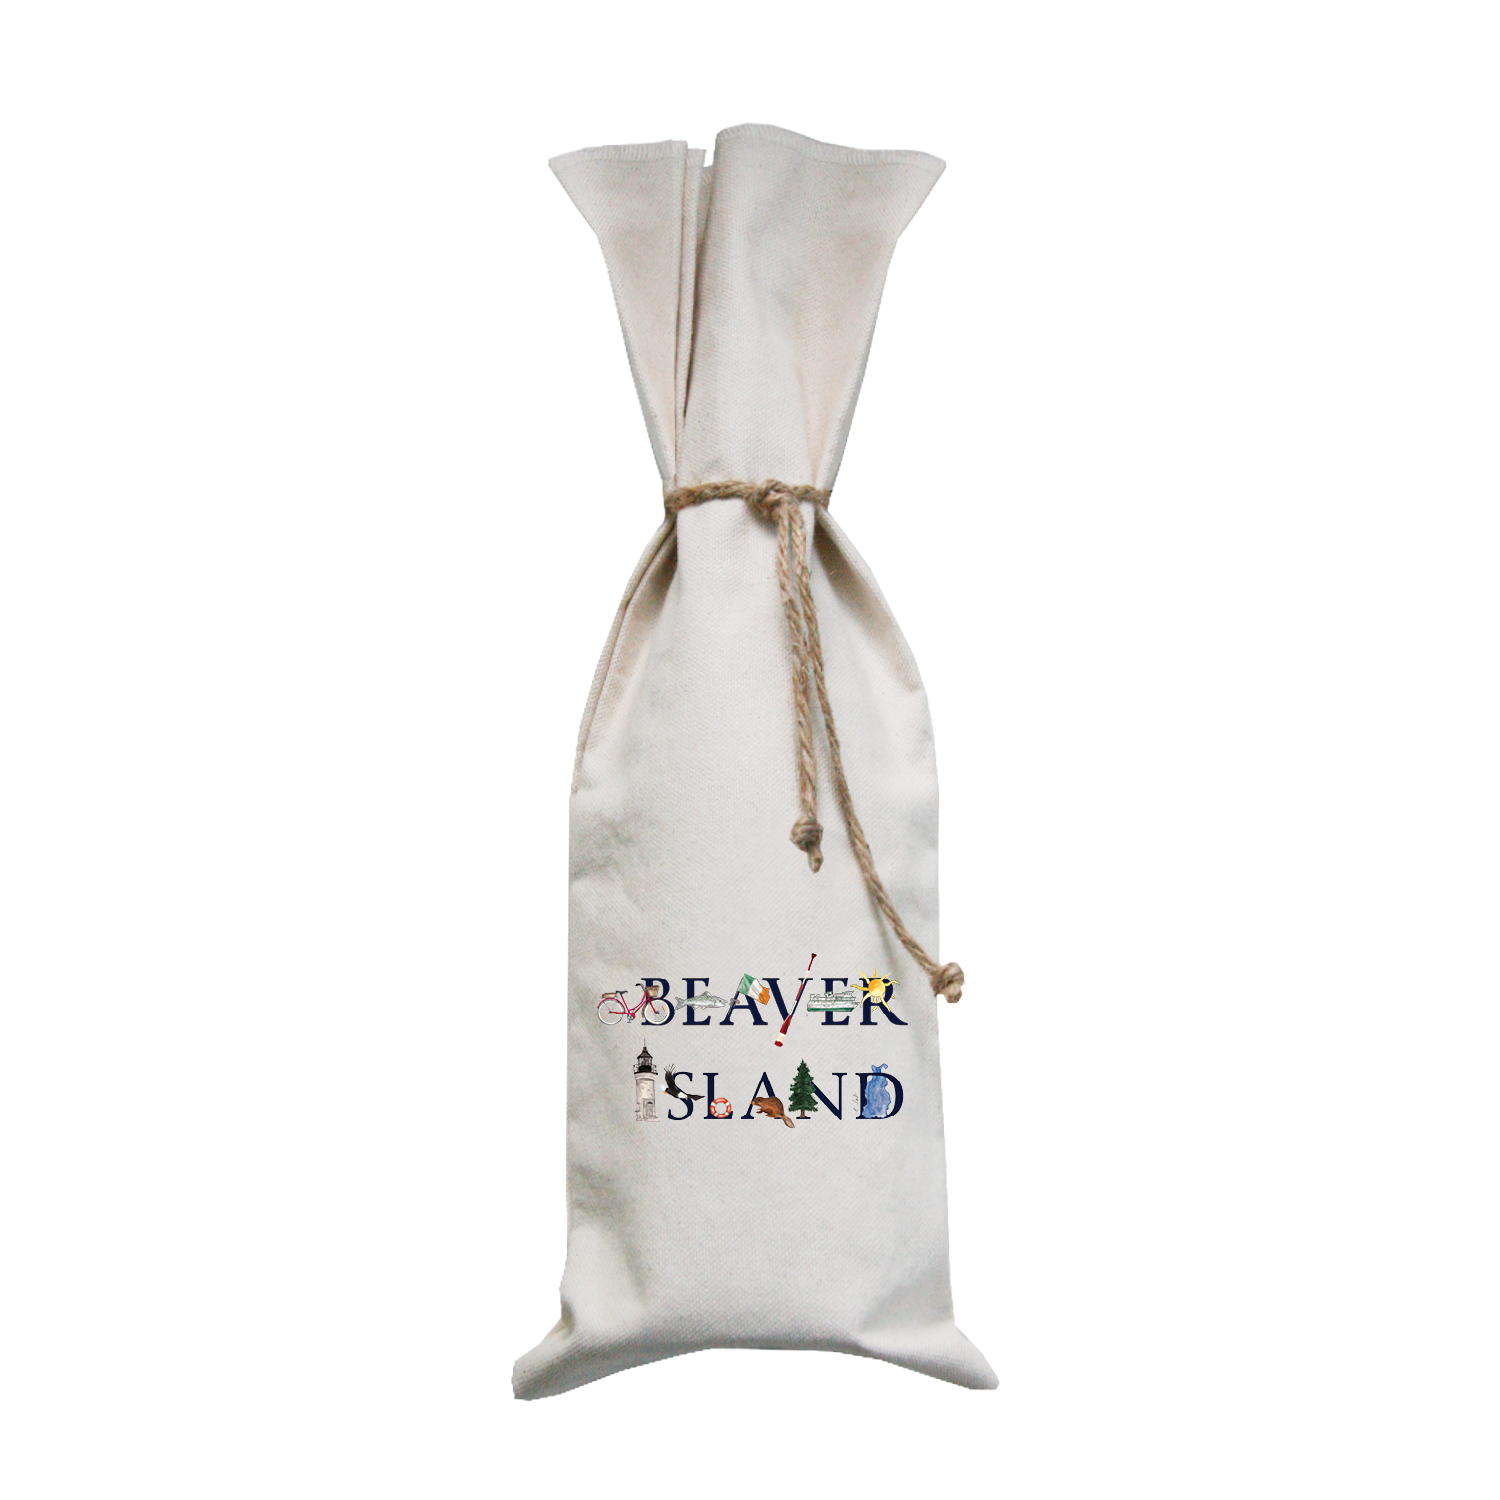 beaver island wine bag